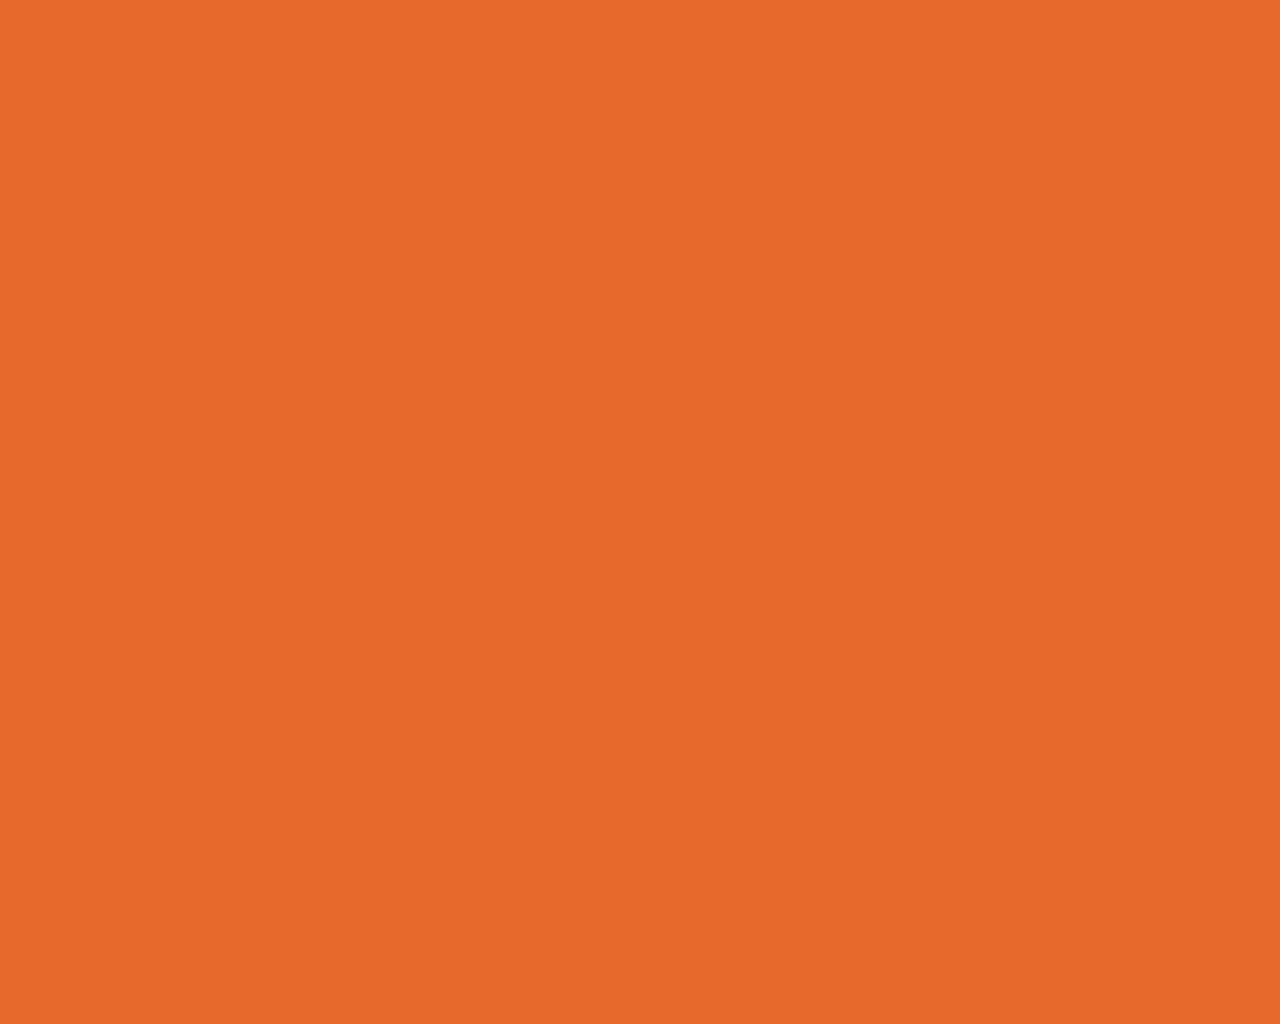 A Bright, Punchy Plain Orange Background Wallpaper